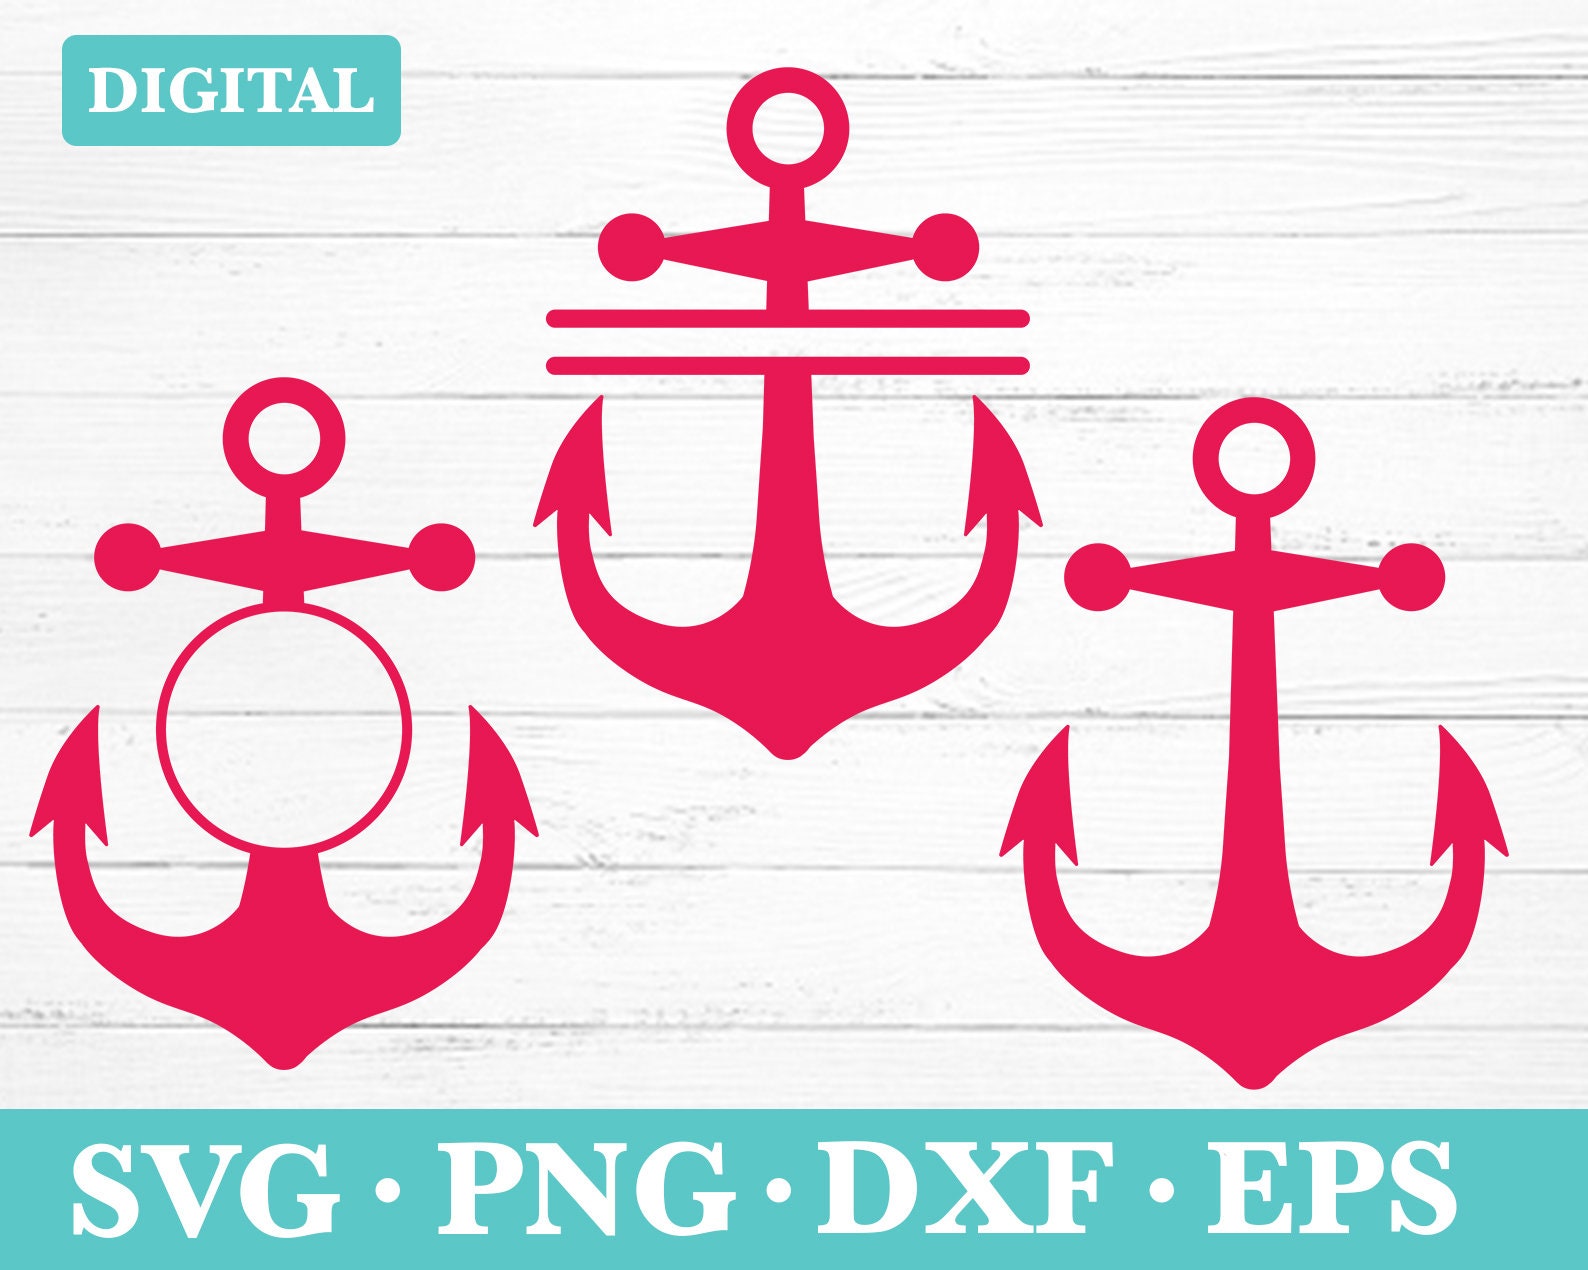 Anchor Svg, Anchor Silhouette, Marine Sailor Nautical Cricut Transparent  Outline Vector DXF EPS PDF Png clipart printable Decor Cut File